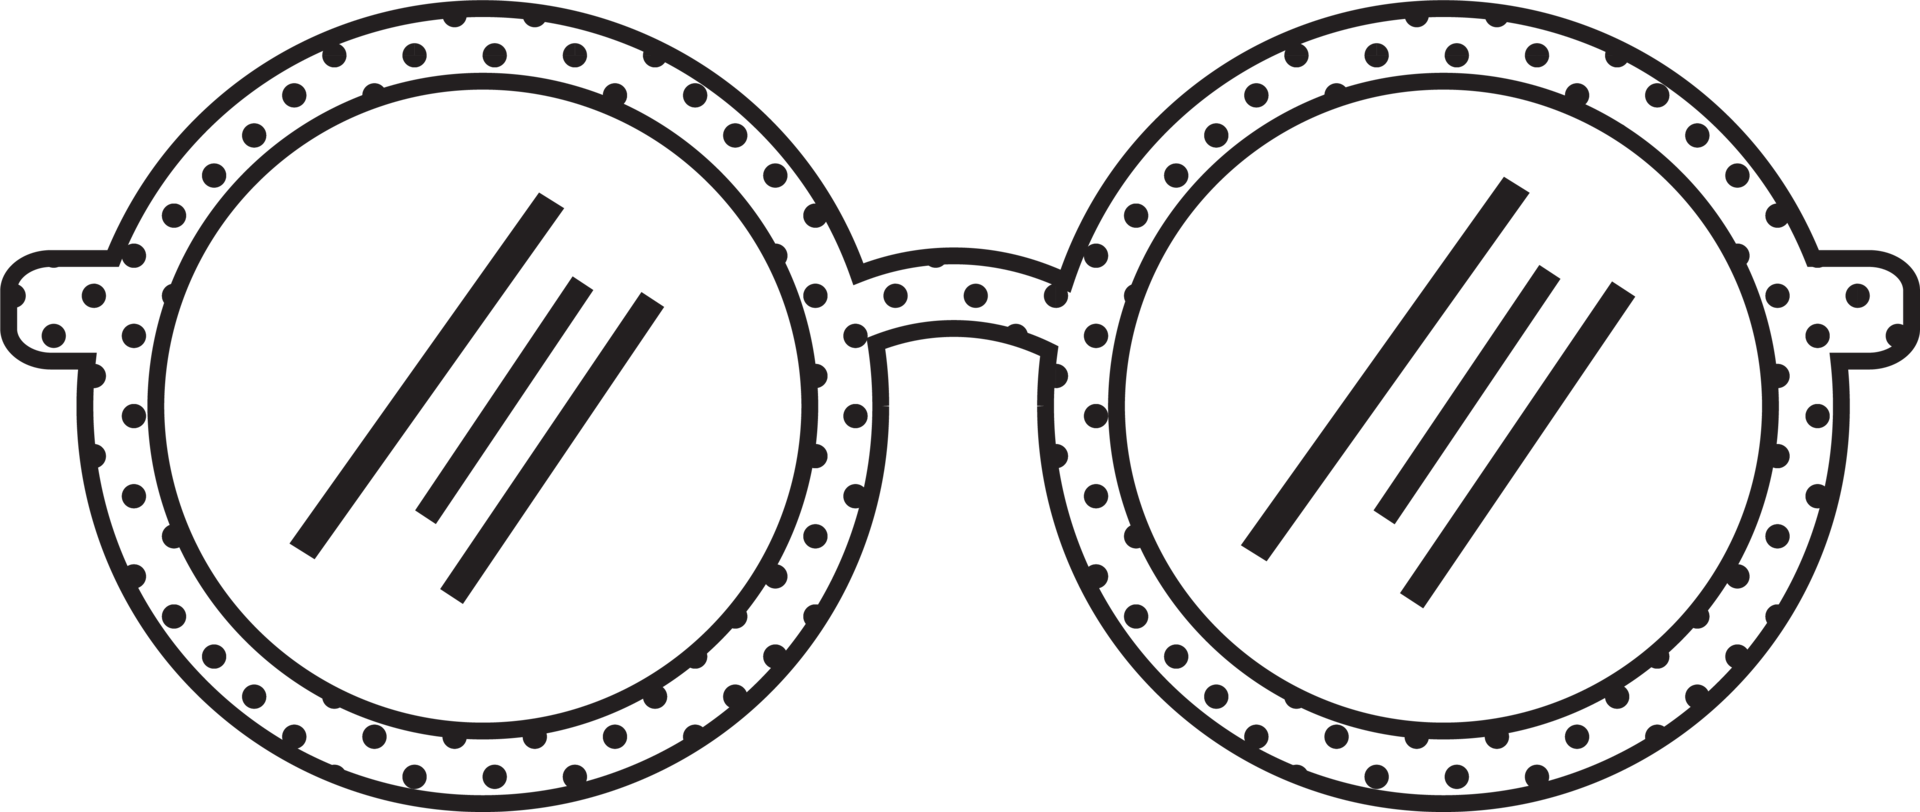 Glasses icon sign symbol design png